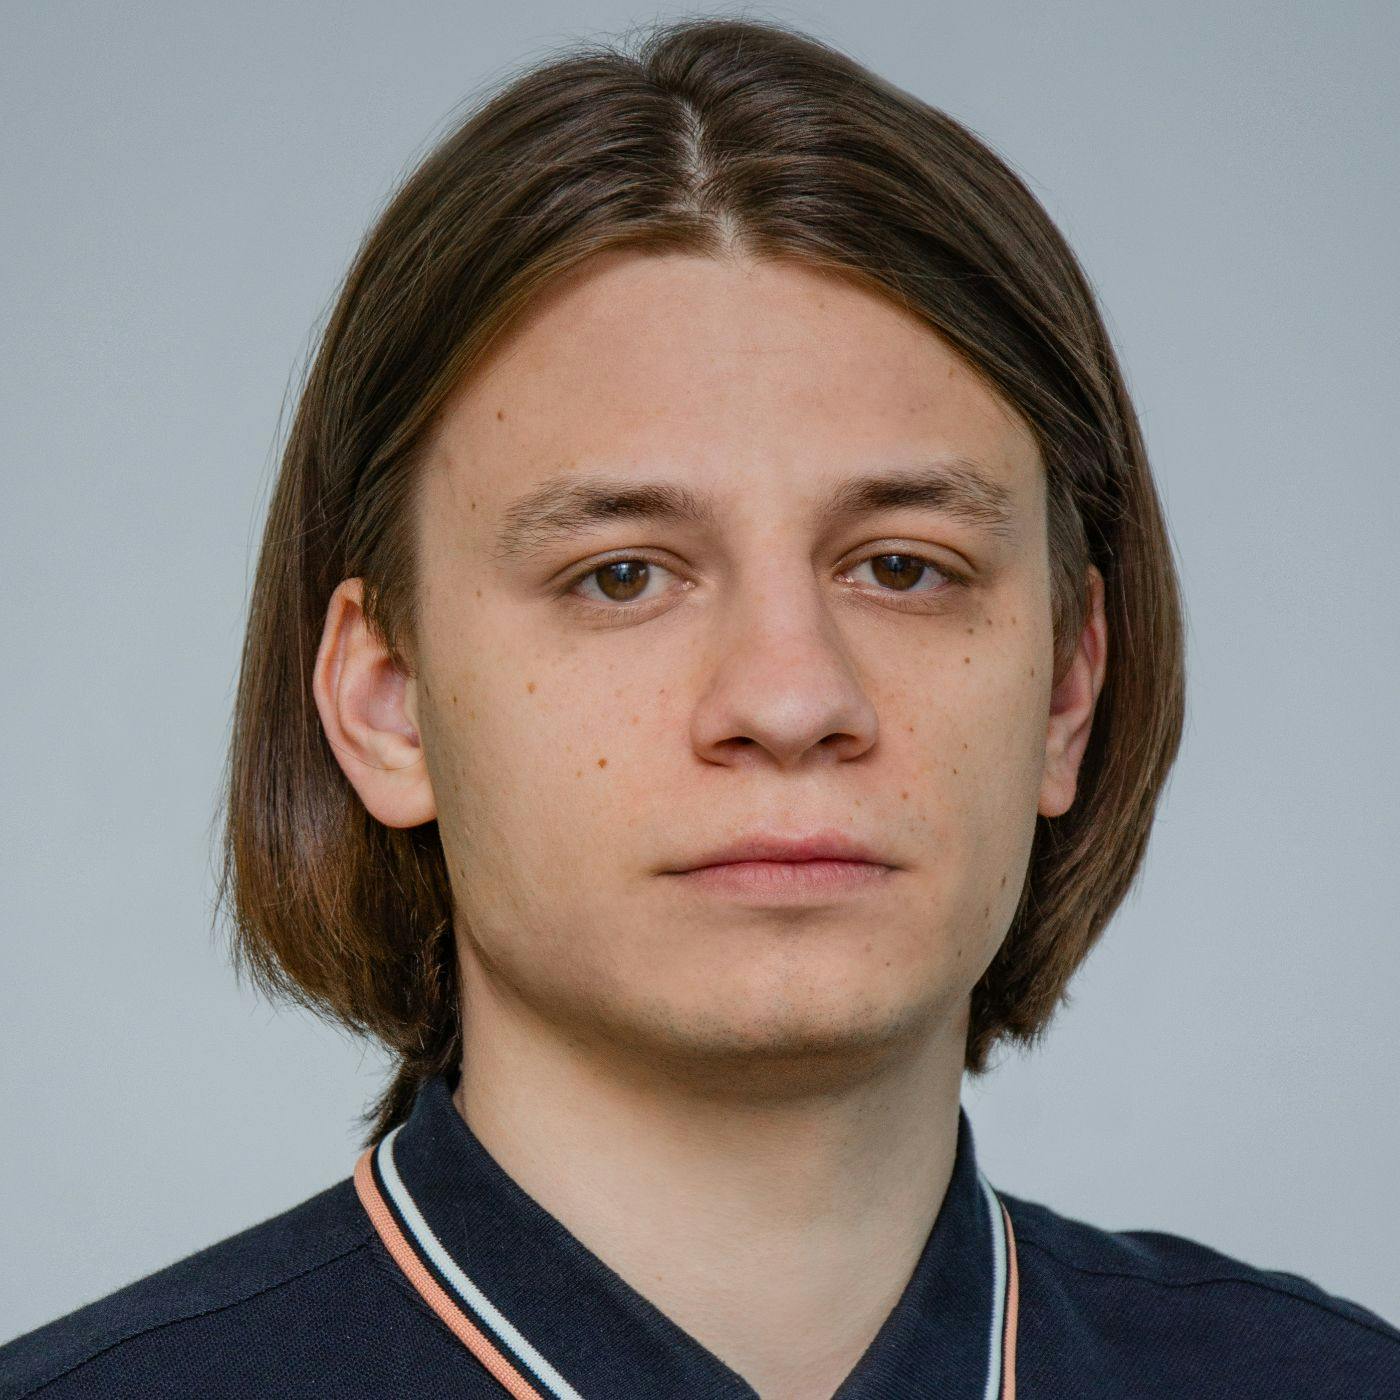 Cheslav Novytskyi HackerNoon profile picture